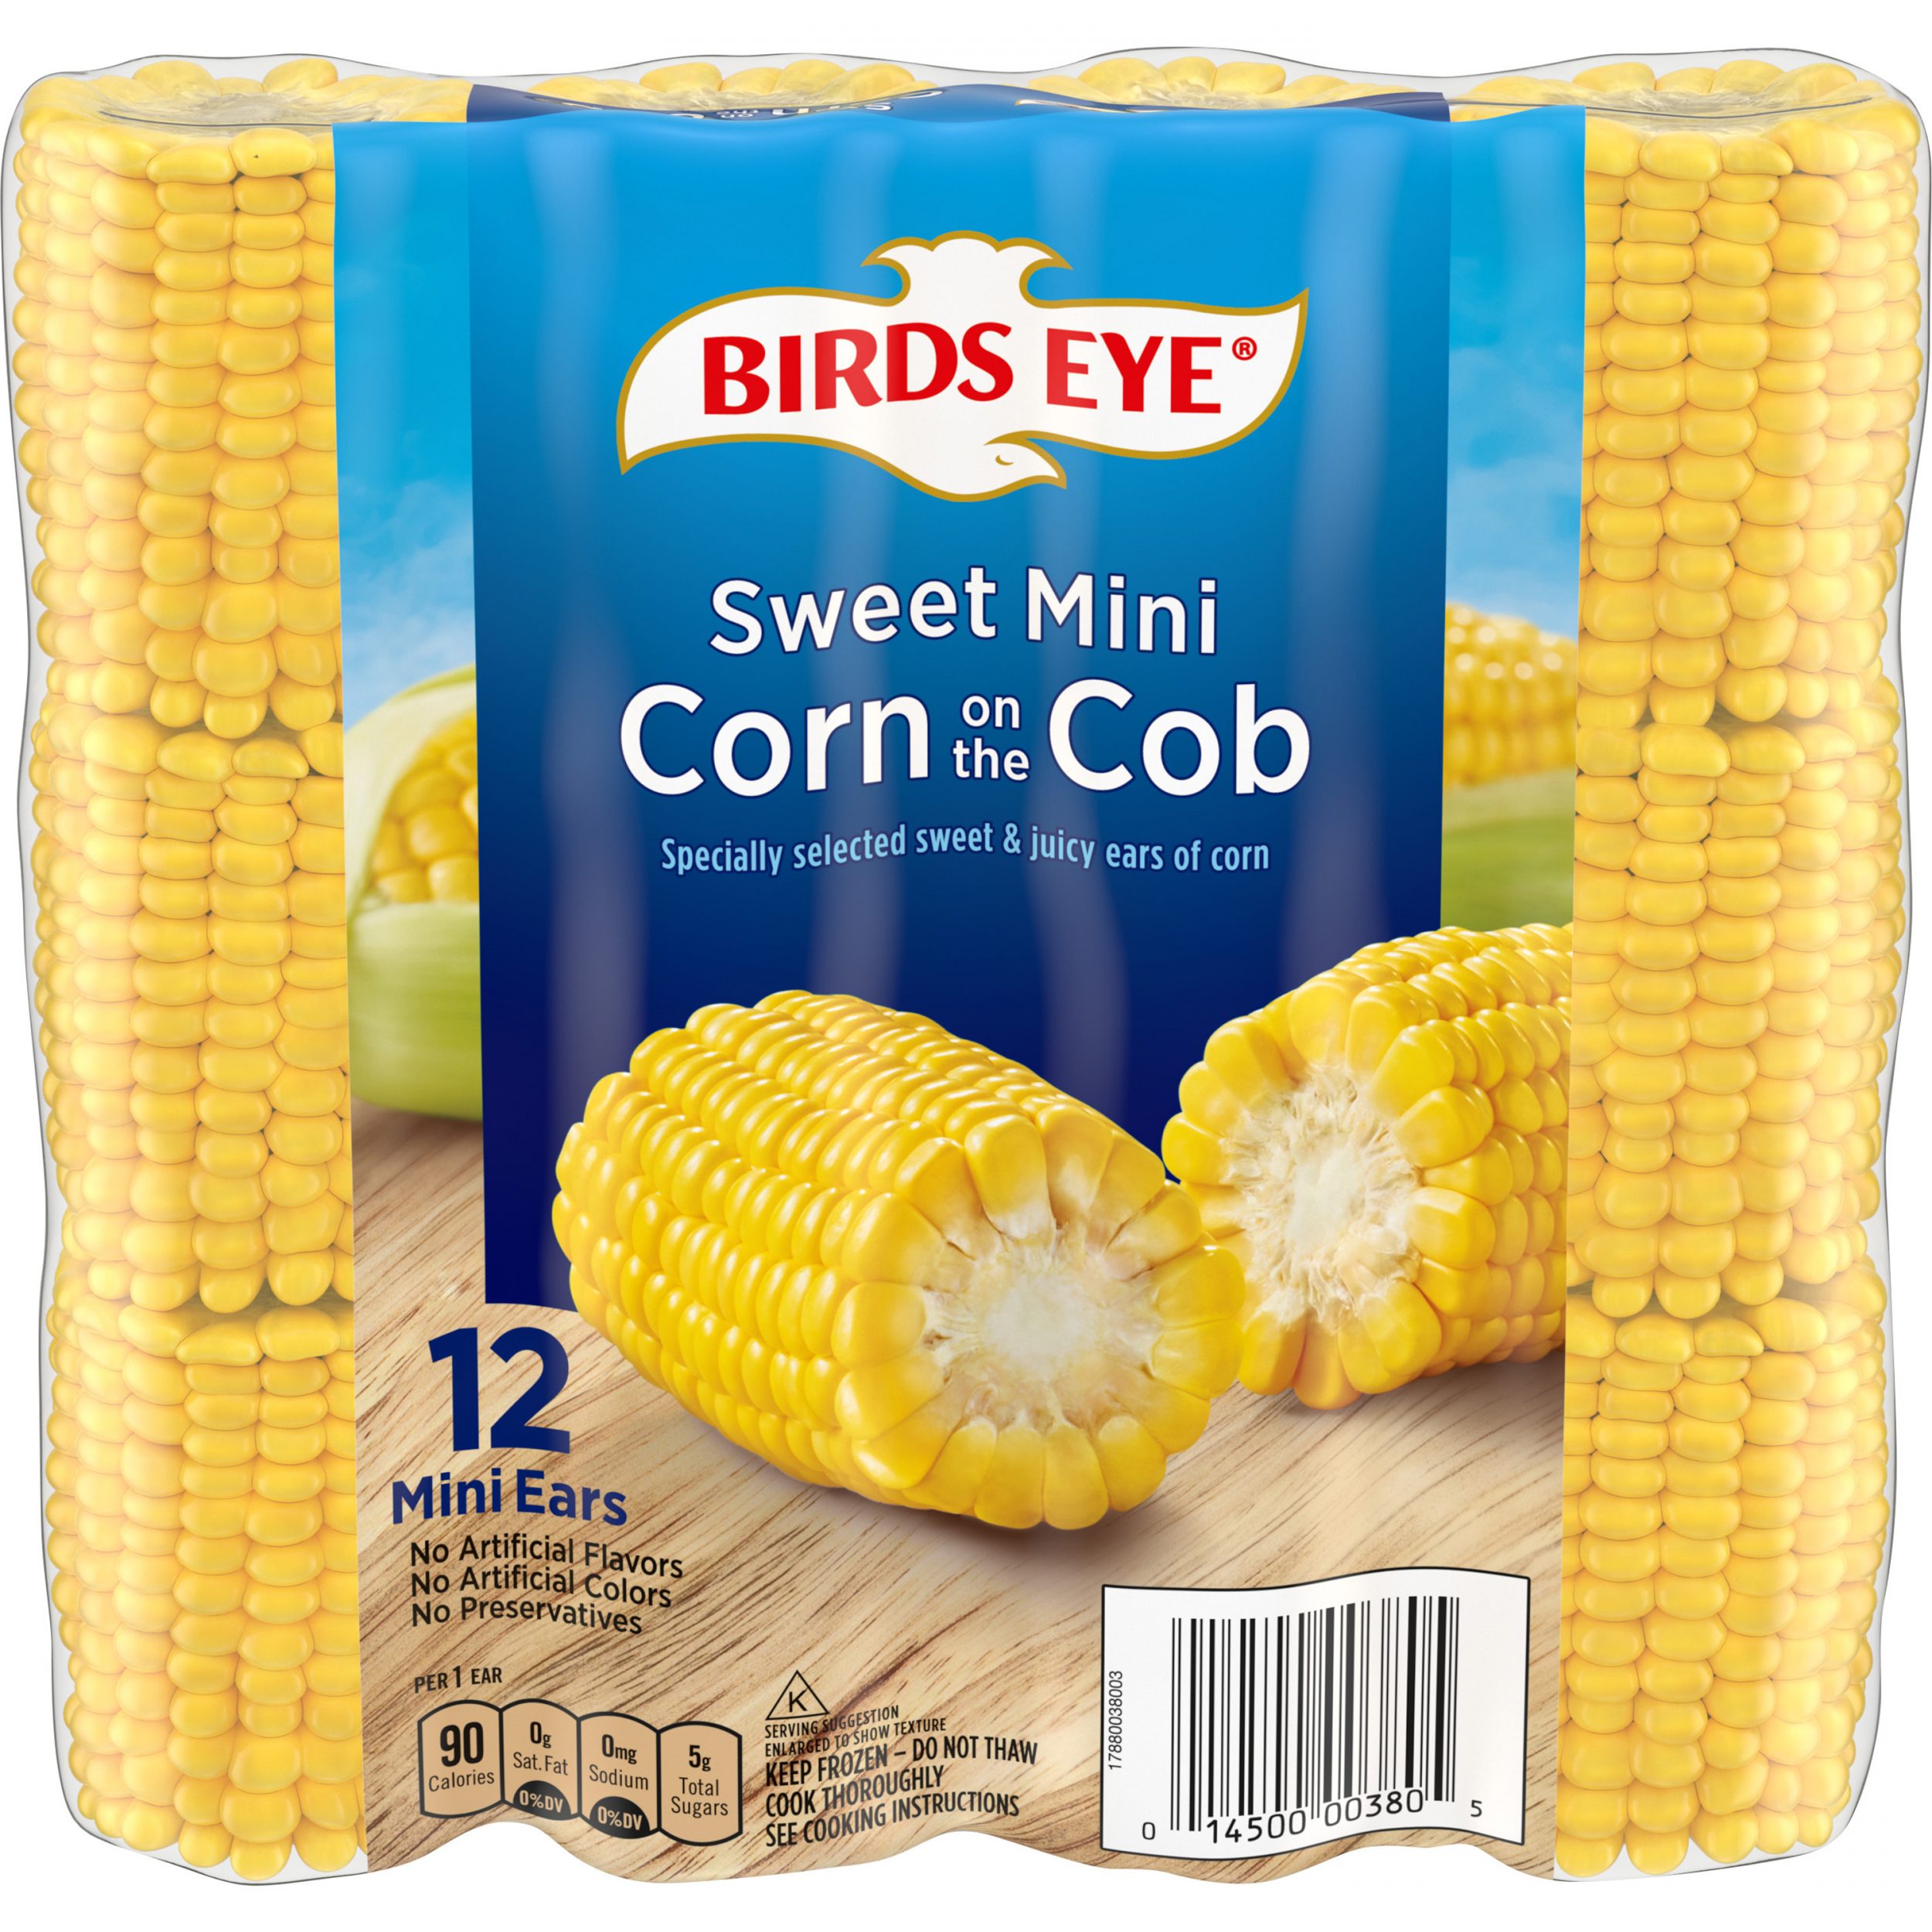 Birds Eye Fresh Frozen Select Vegetables Sweet Mini Corn on the Cob – 12